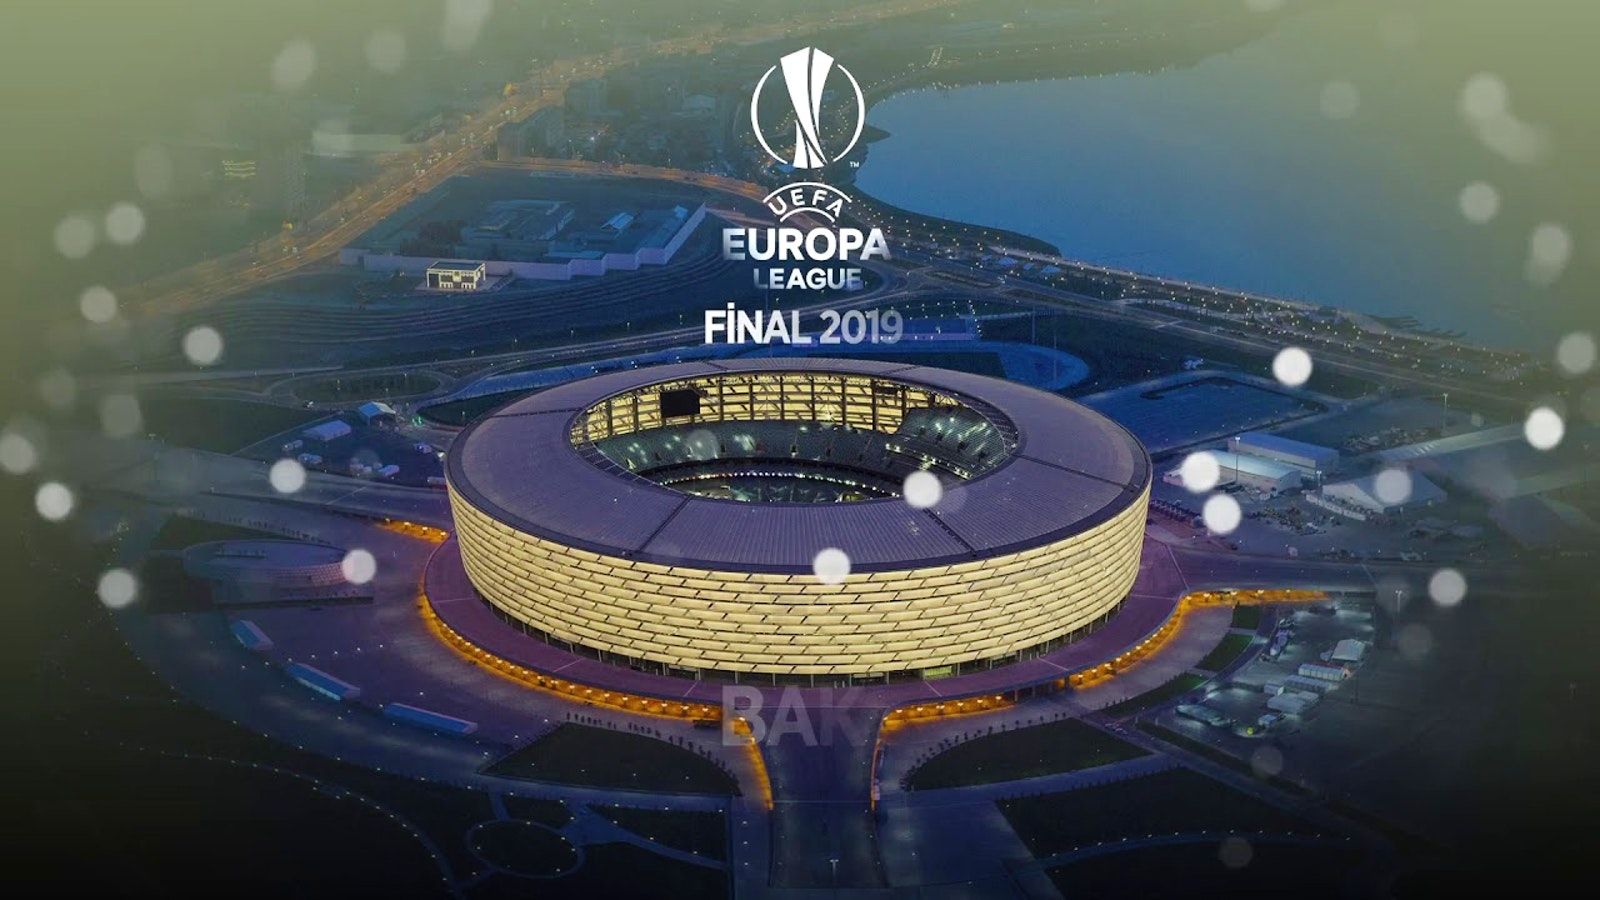 2019 UEFA Champions League Final Wallpaper